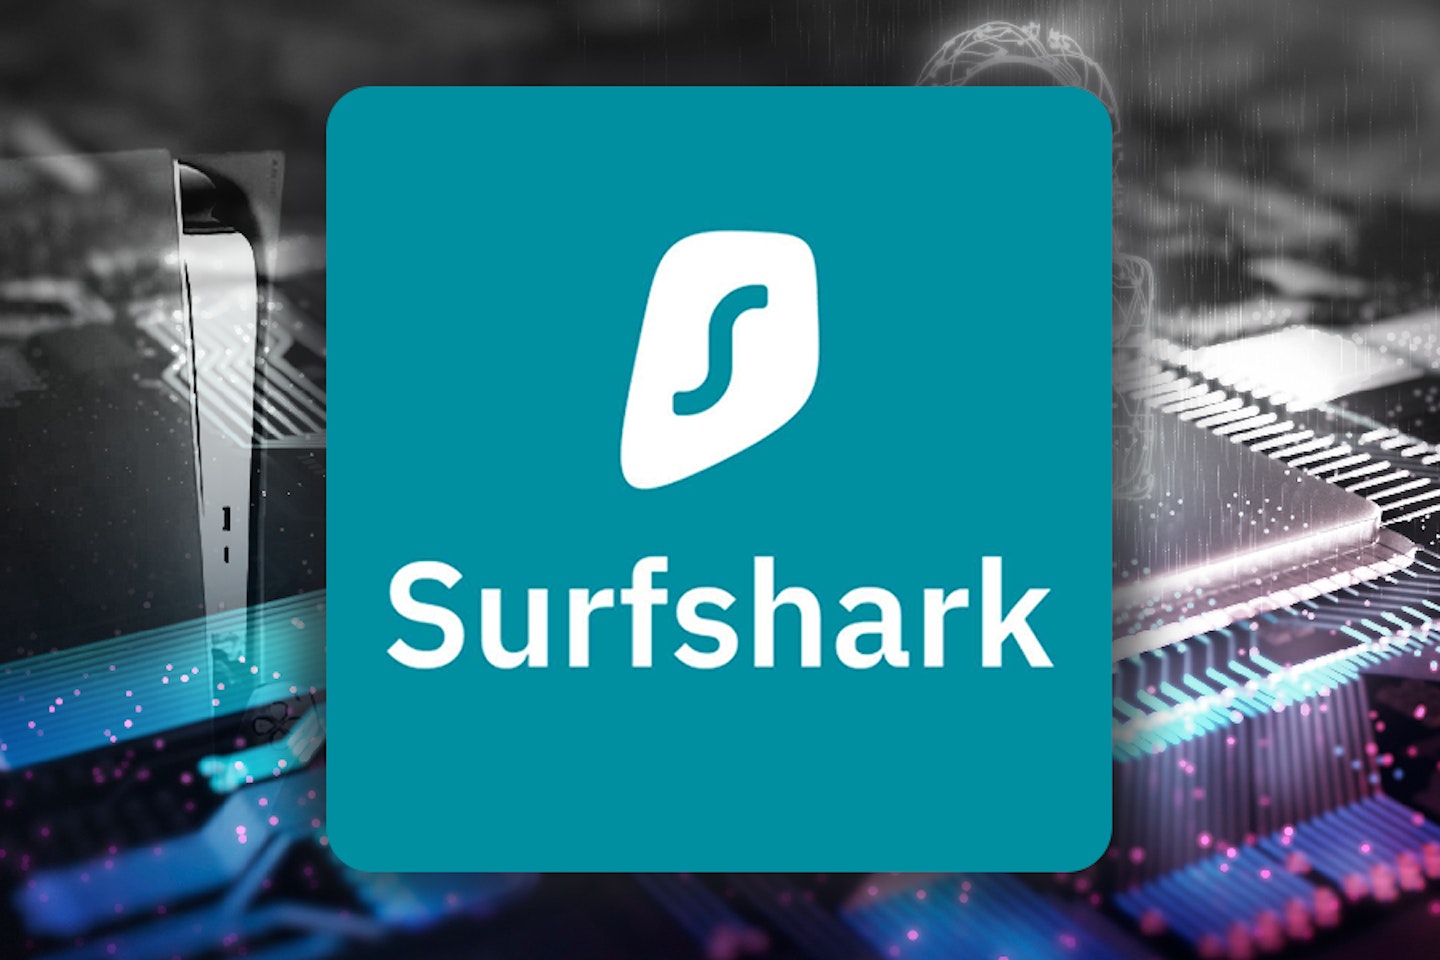 SurfShark - possibly the best PS5 VPN